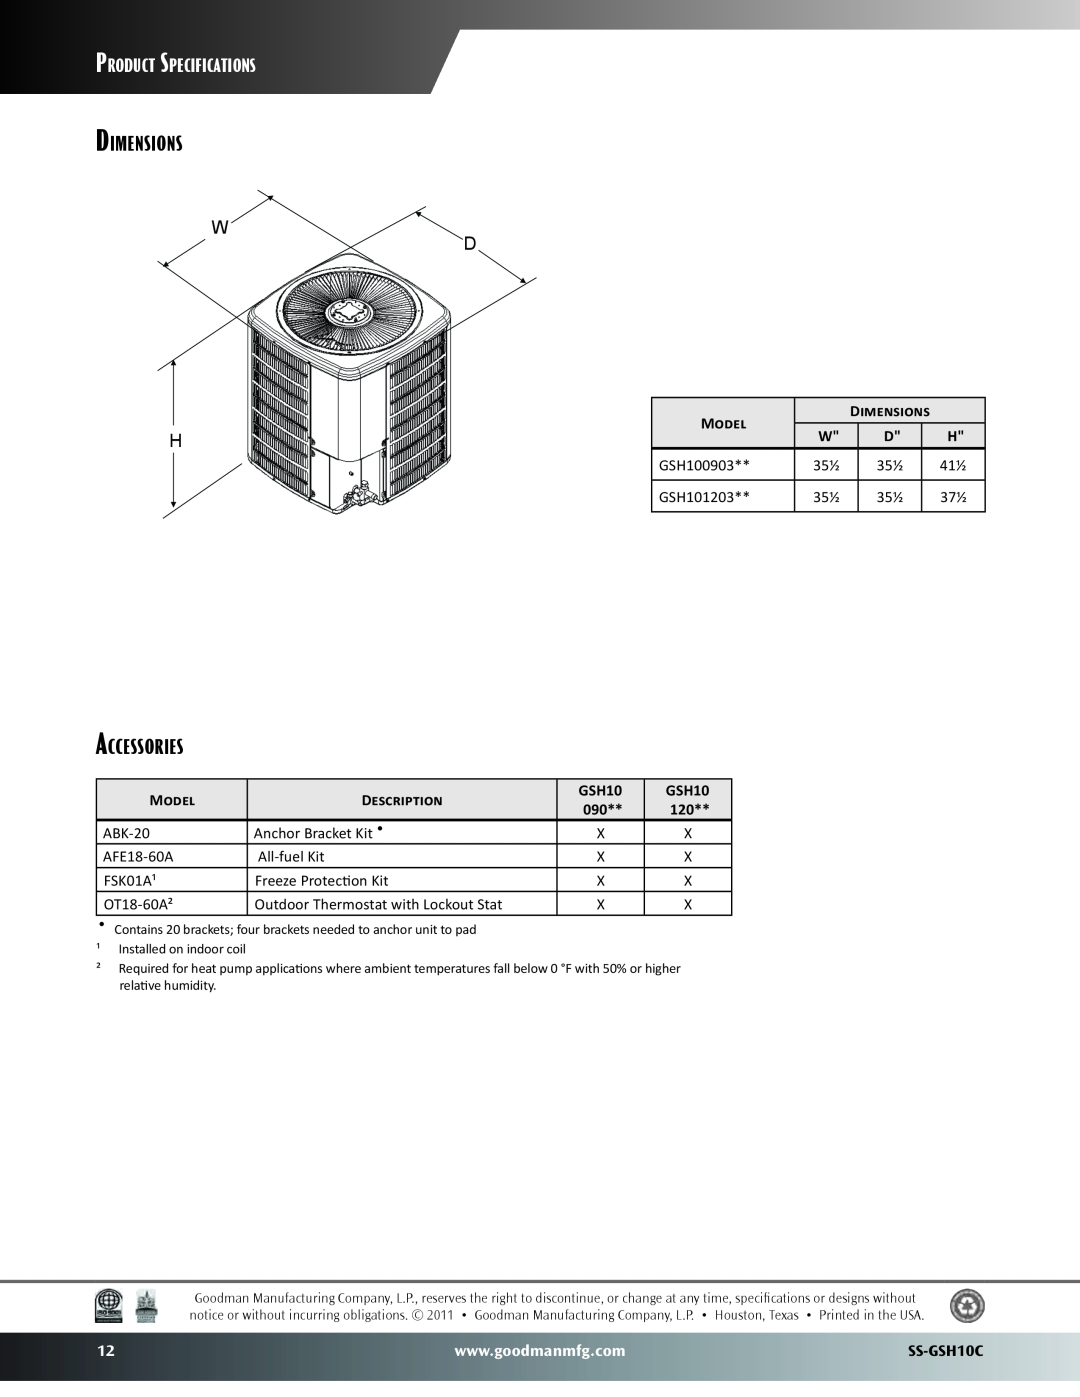 Goodman Mfg SS-GSH10C warranty Dimensions, Accessories, Product Specifications, Model, Description 